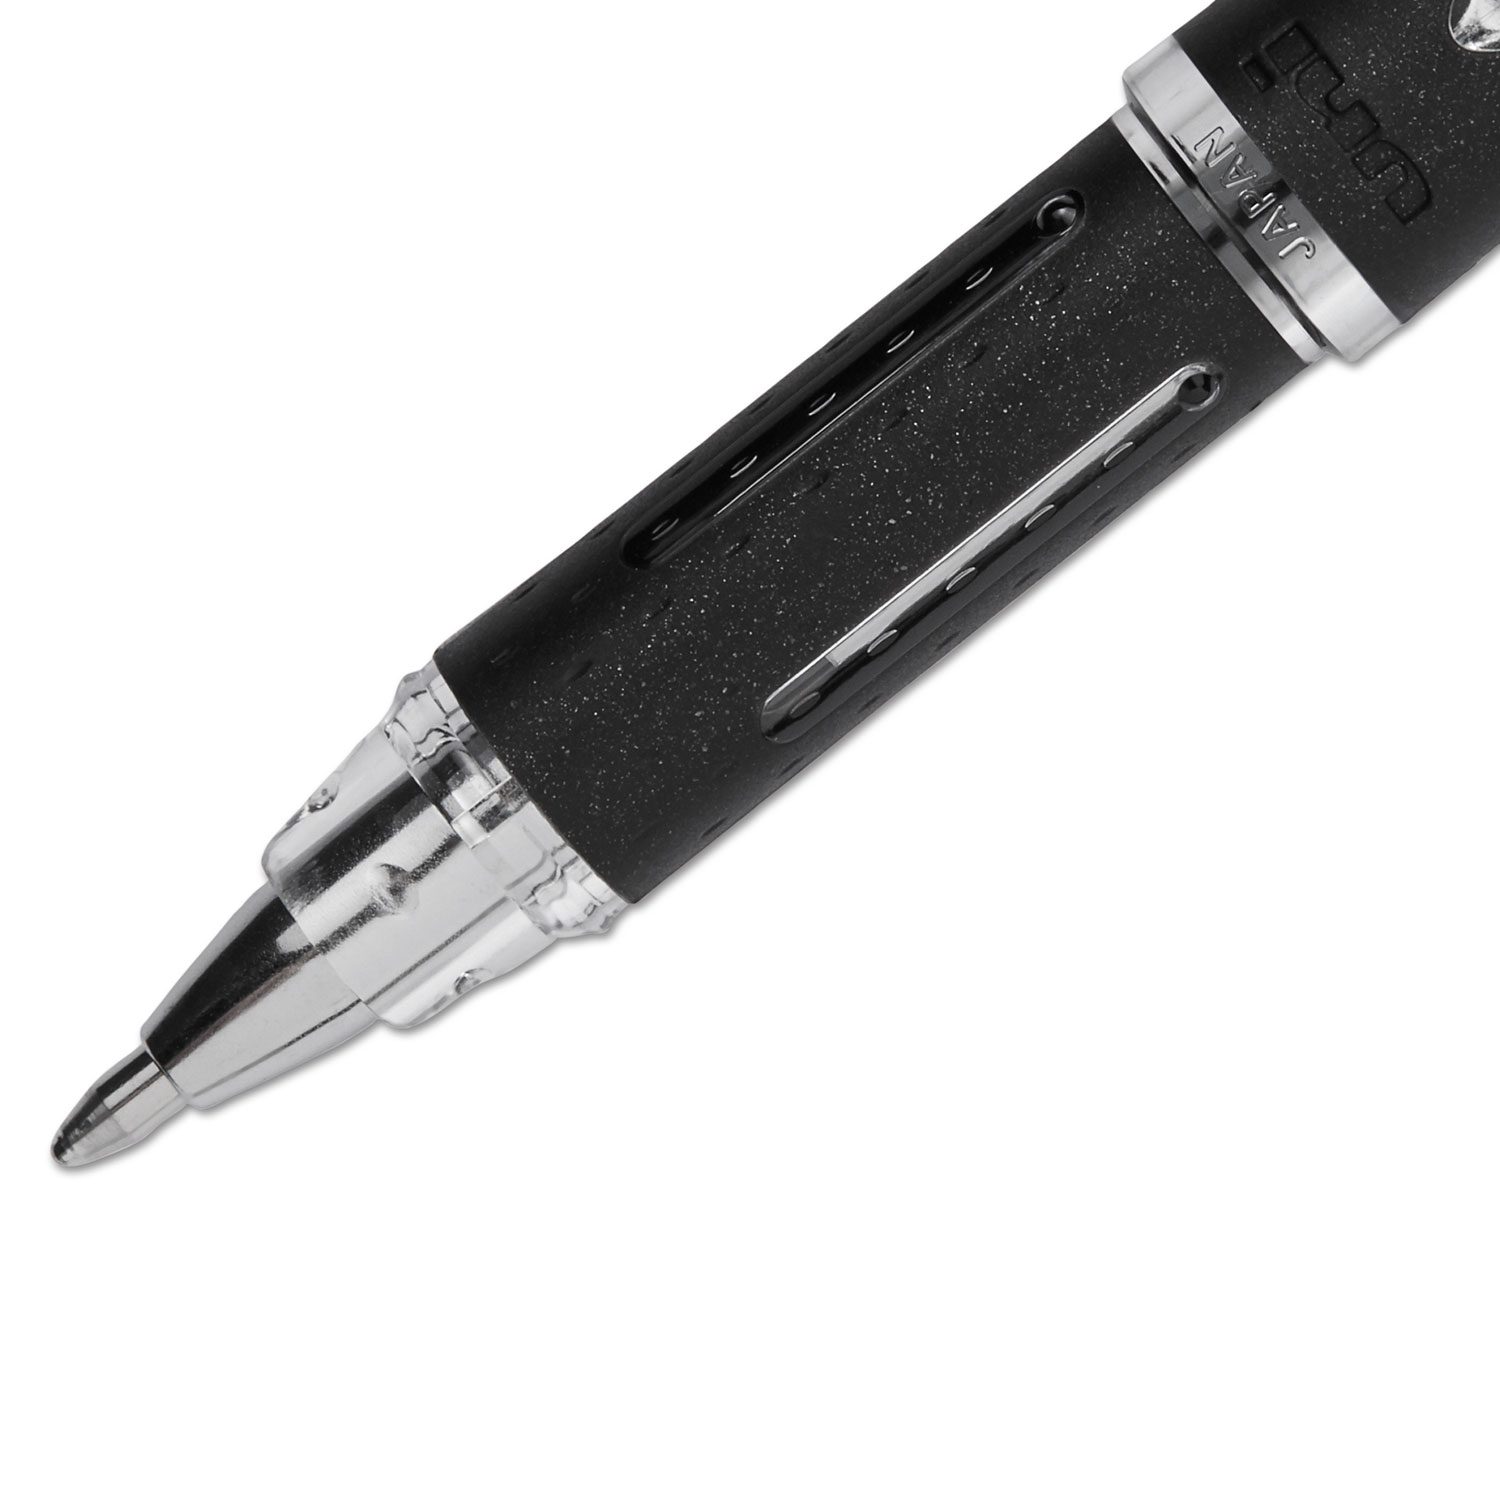 Jetstream Ballpoint Stick Pen, Black Ink, Bold